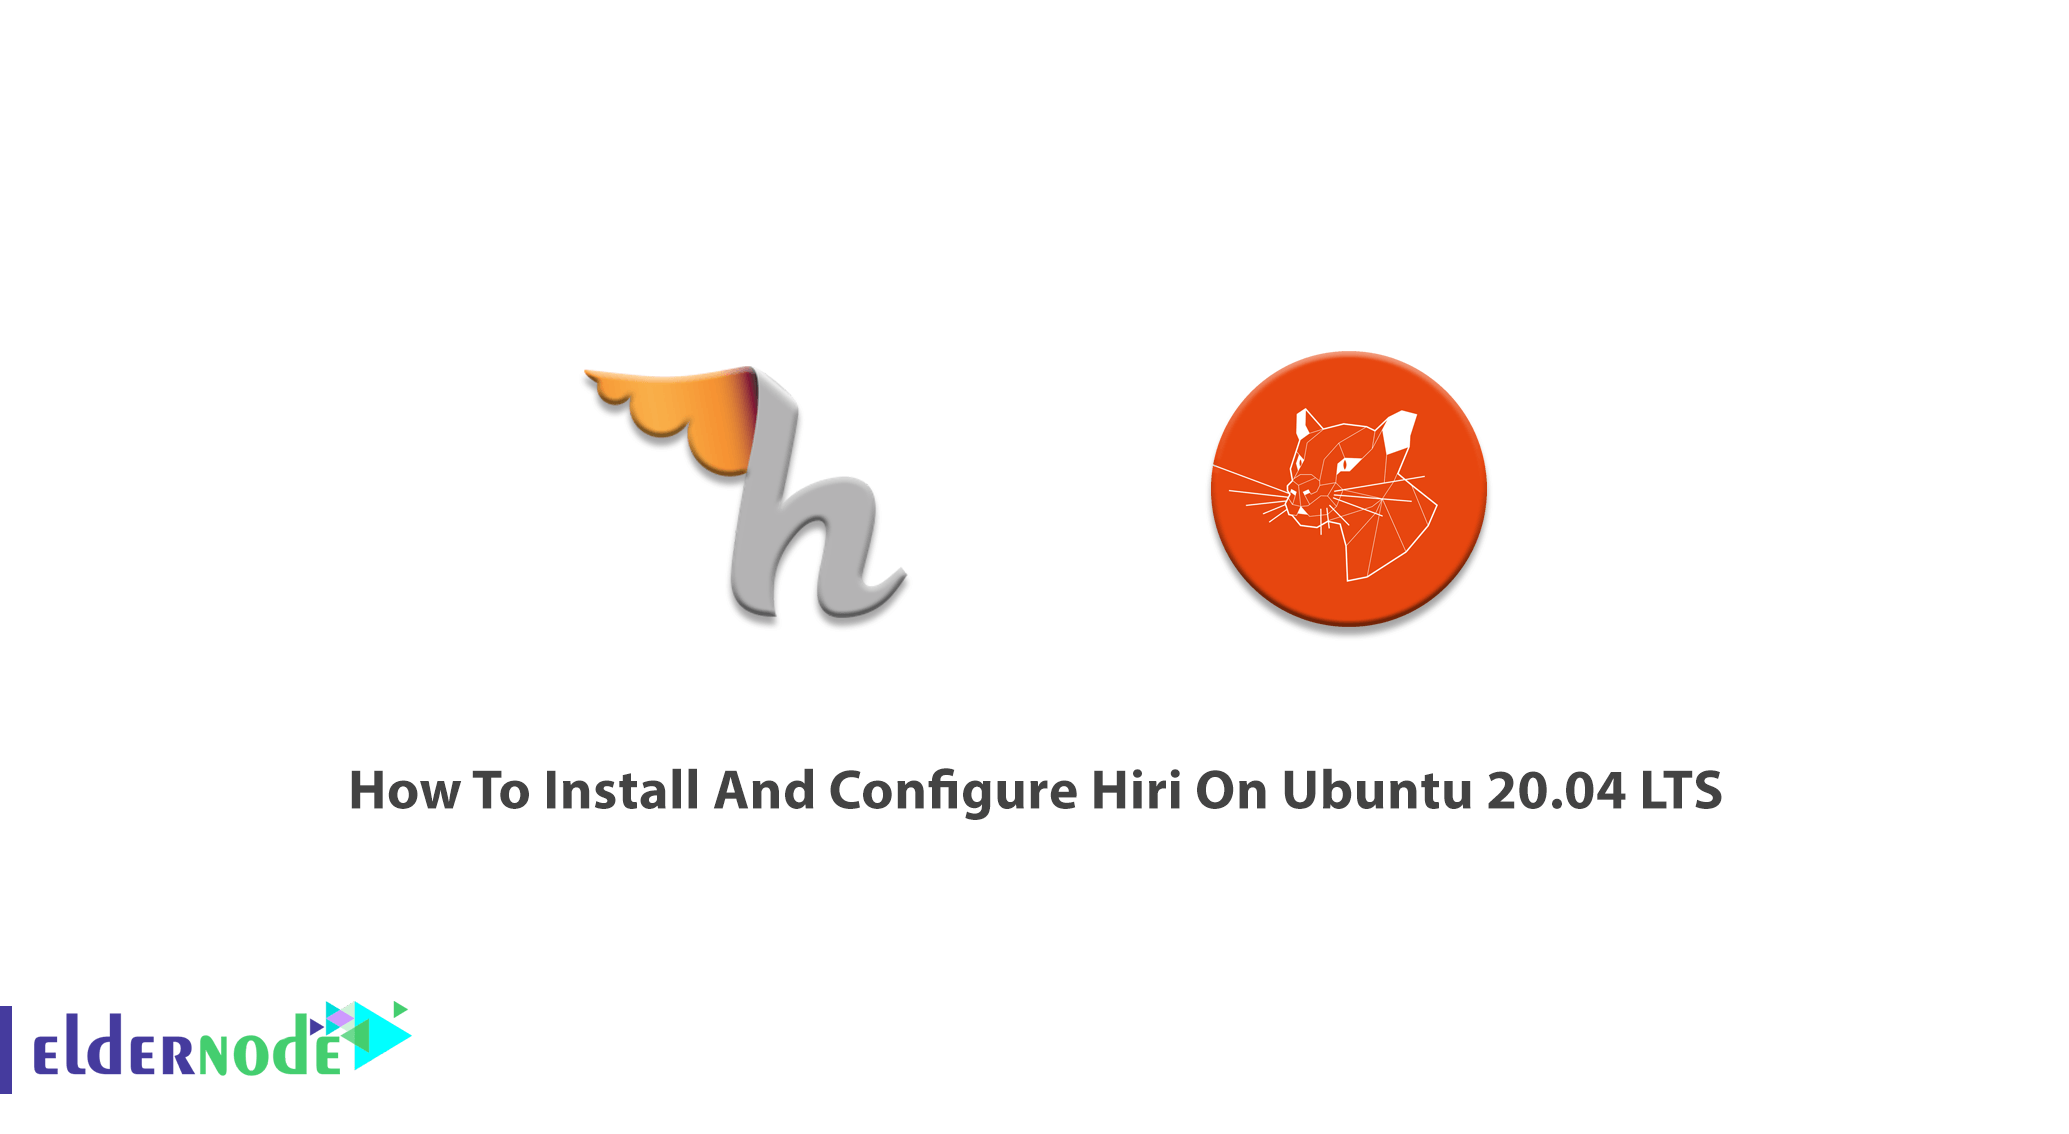 How To Install And Configure Hiri On Ubuntu 20.04 LTS